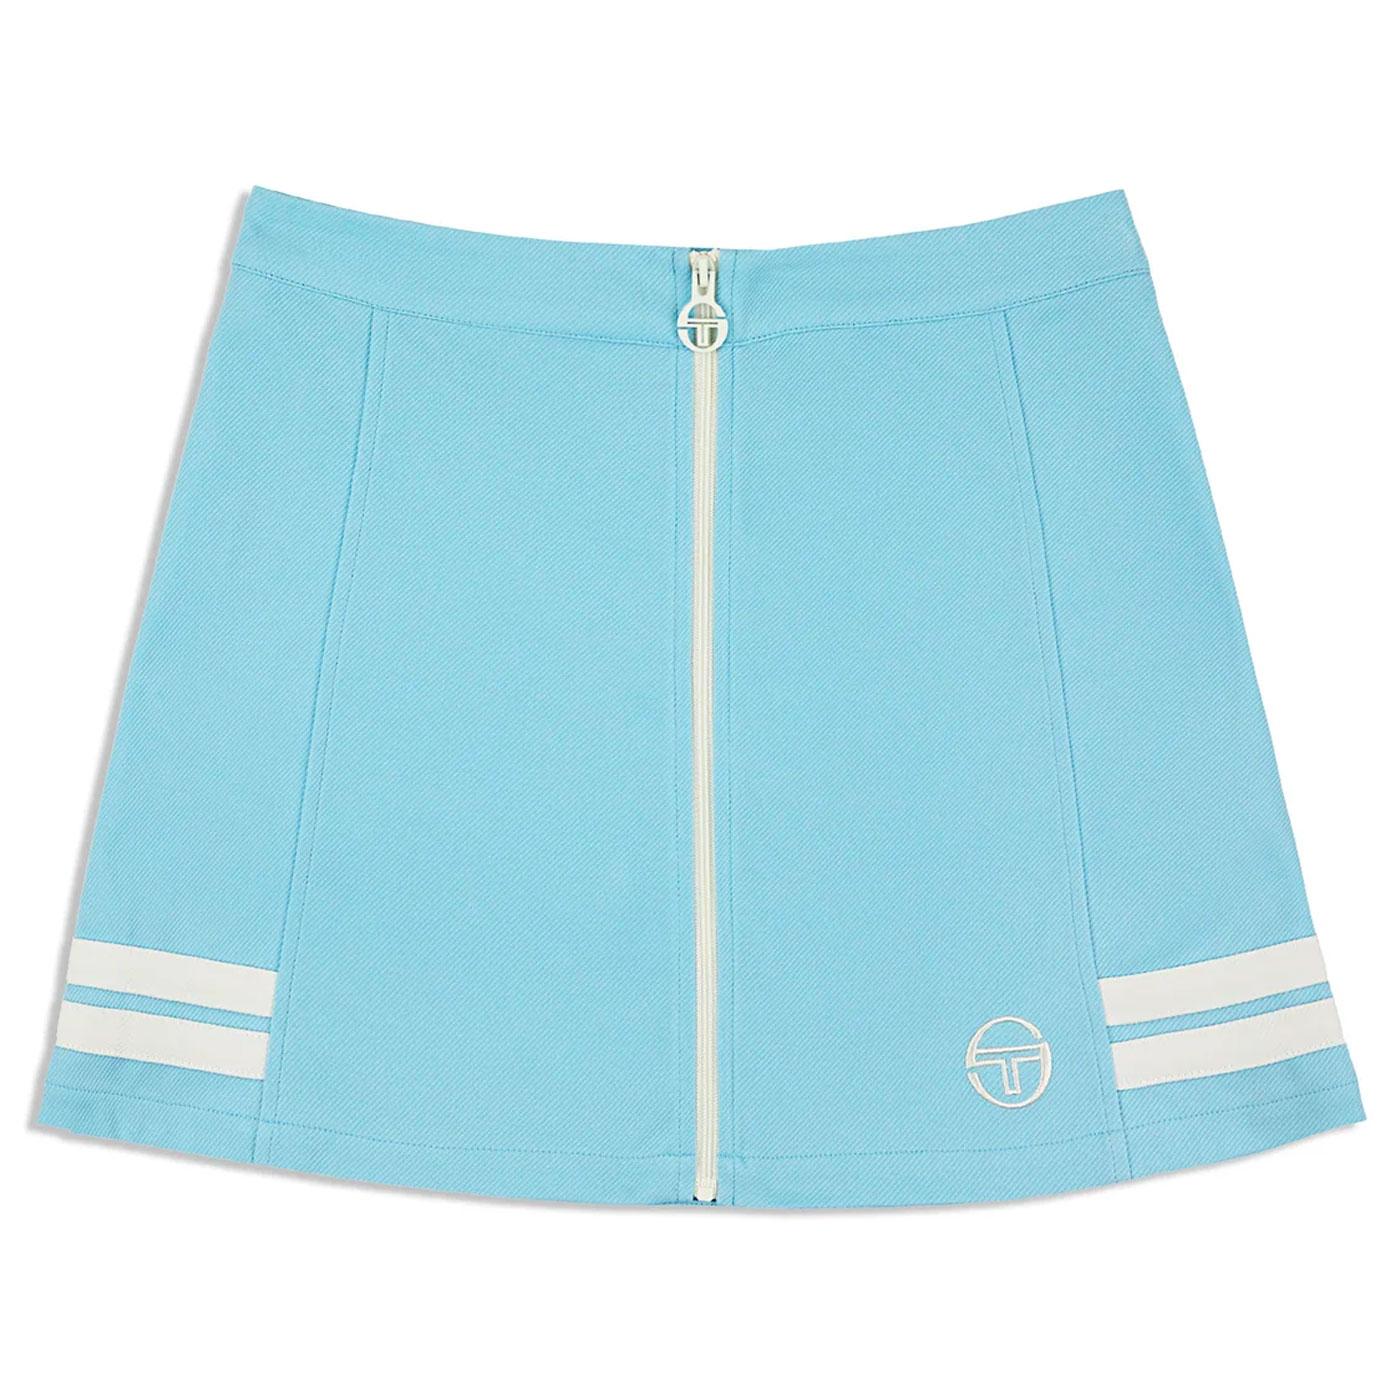 Miss Supermac SERGIO TACCHINI Mini Tennis Skirt CS